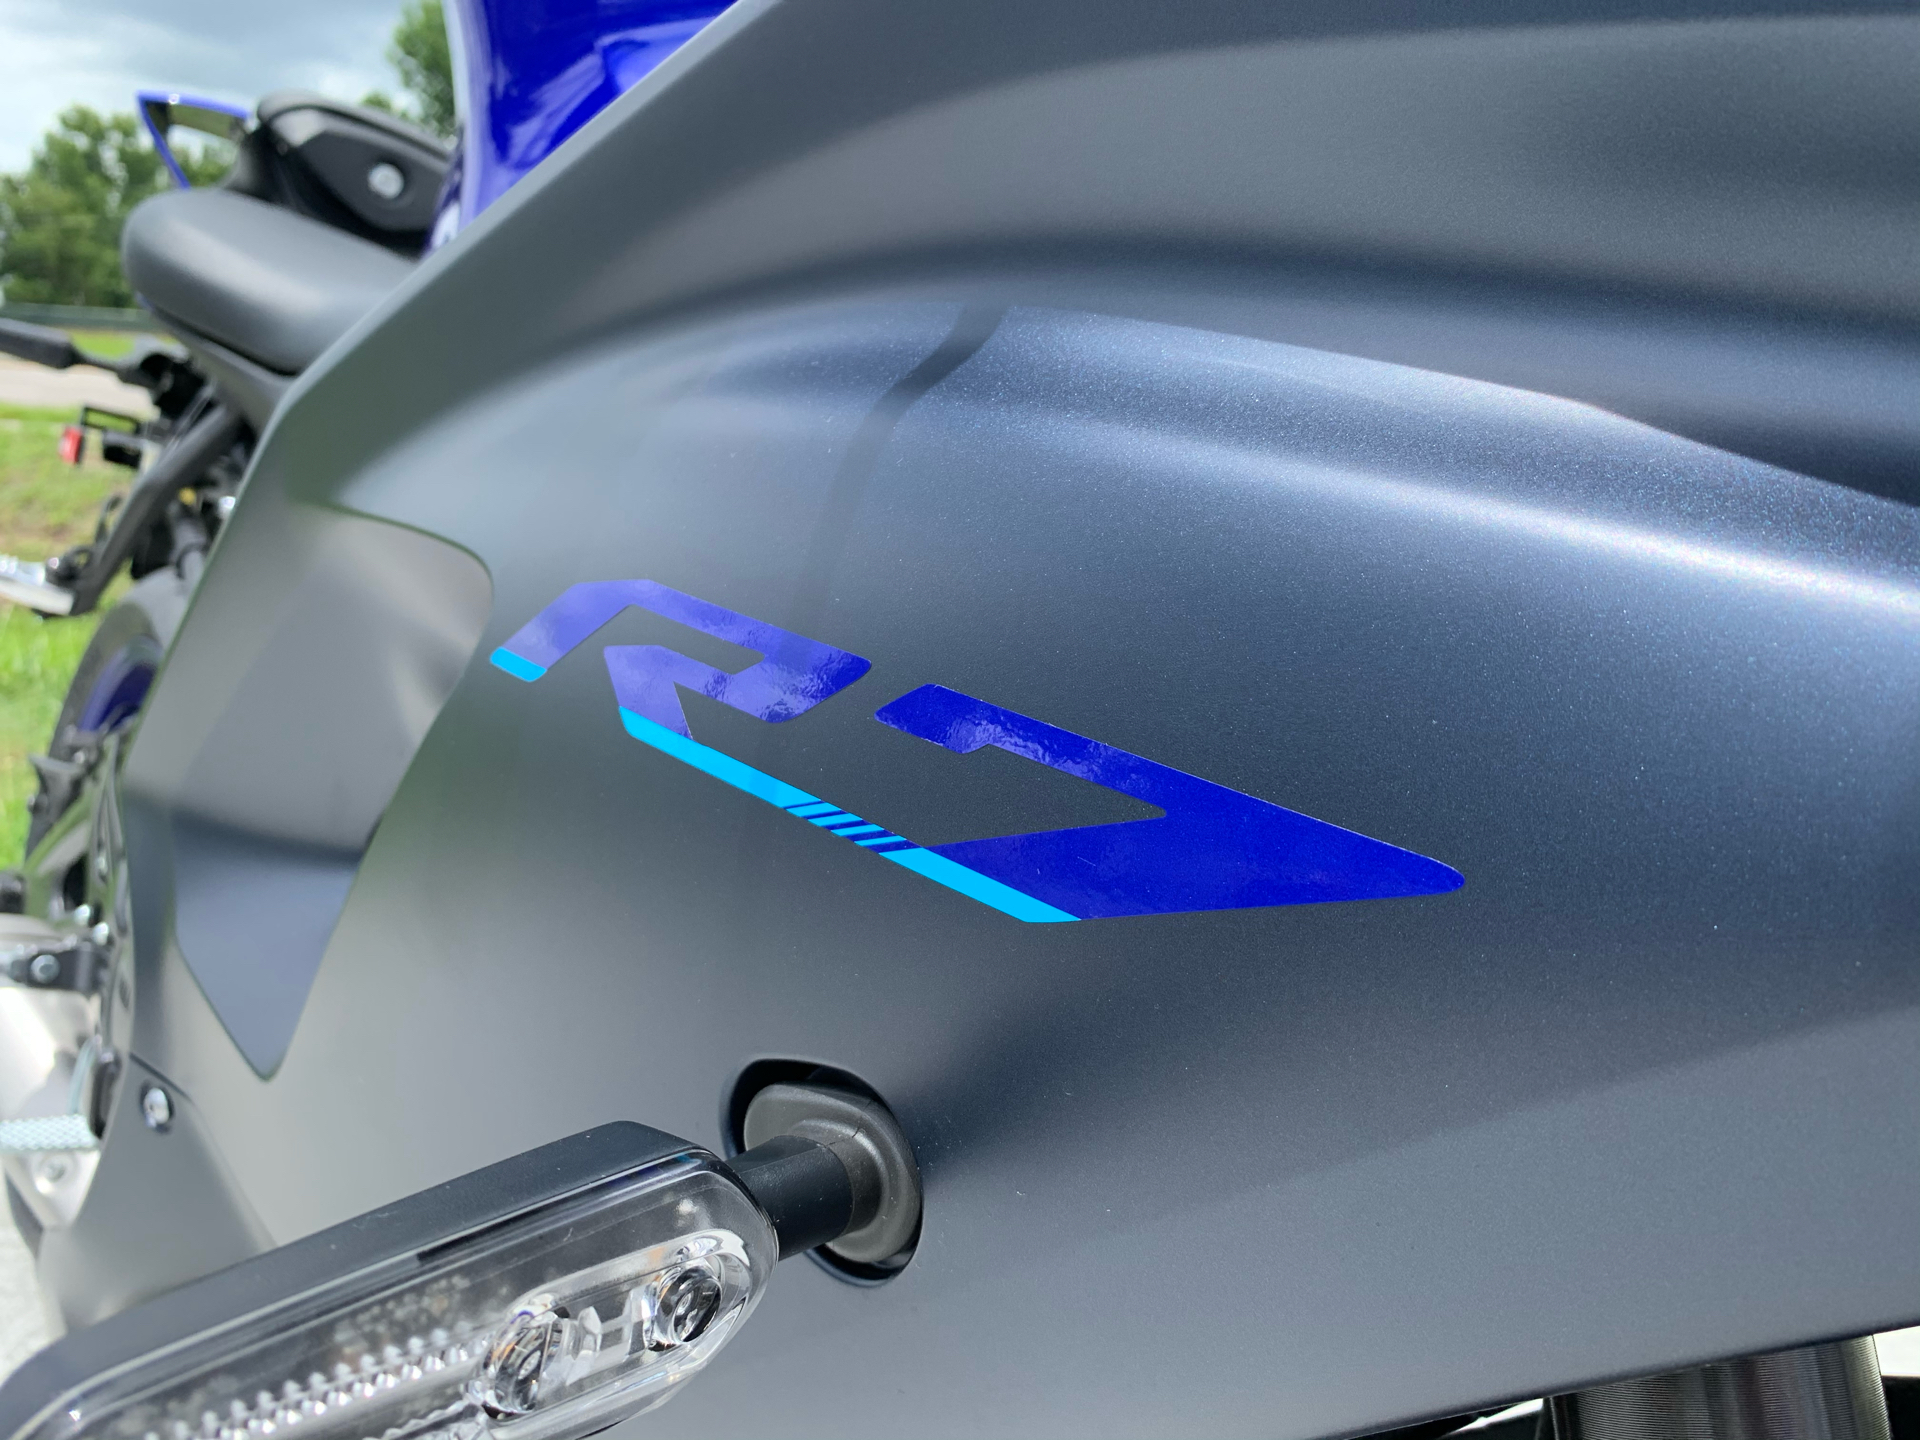 2022 Yamaha YZF-R7 in Orlando, Florida - Photo 3